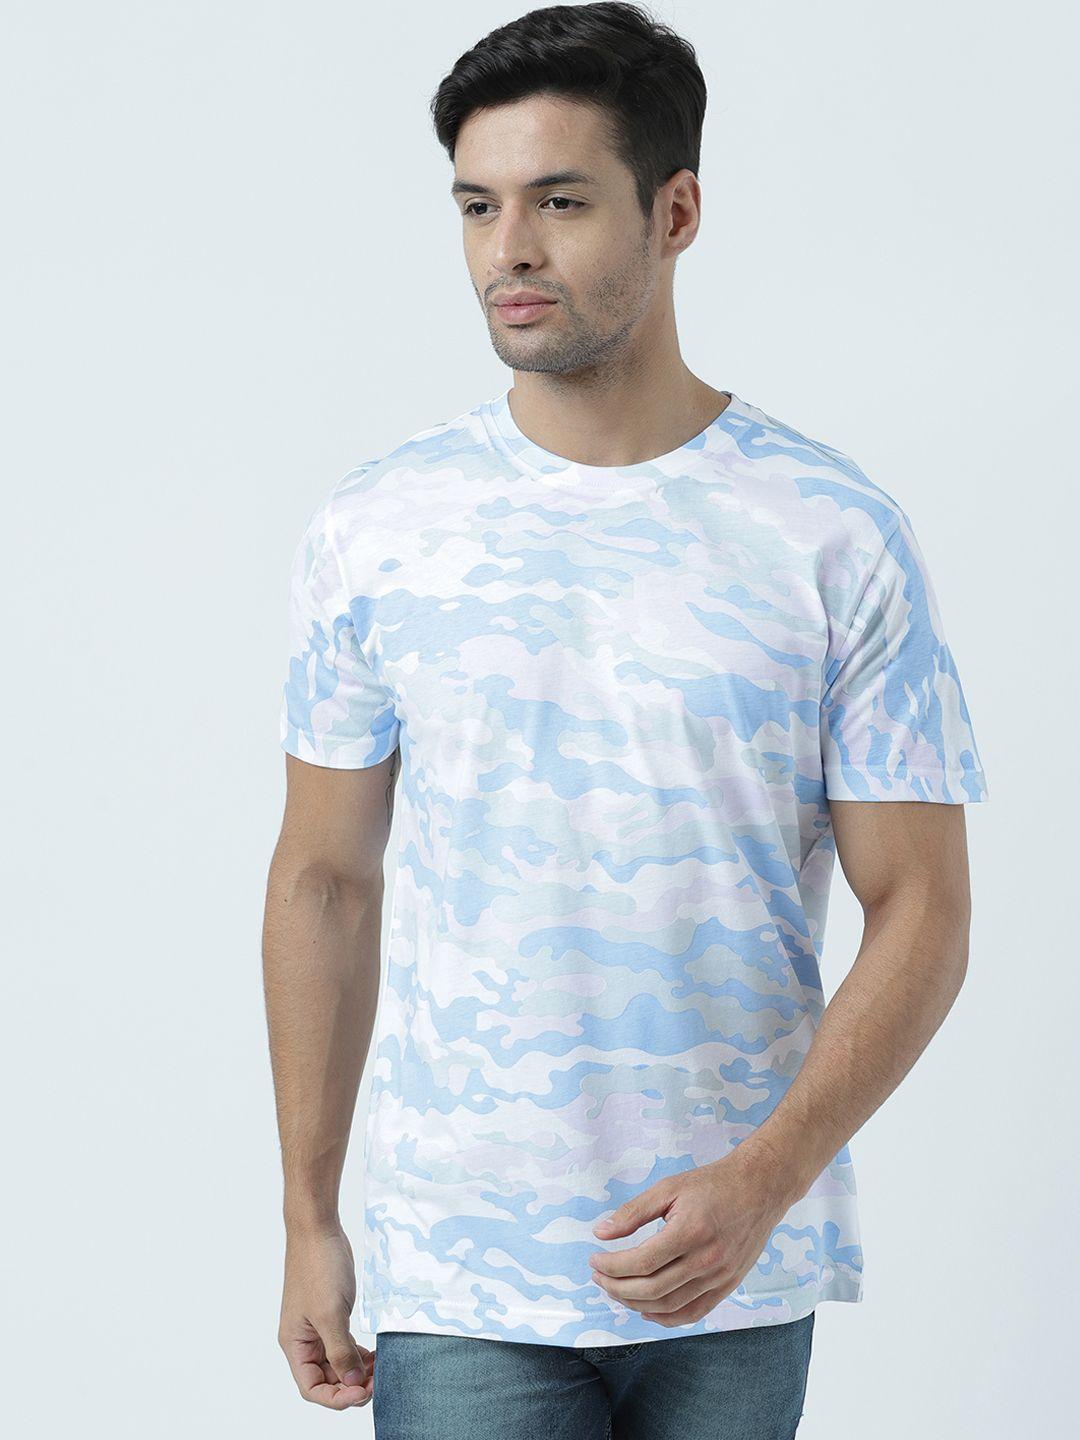 huetrap men white & blue printed round neck t-shirt